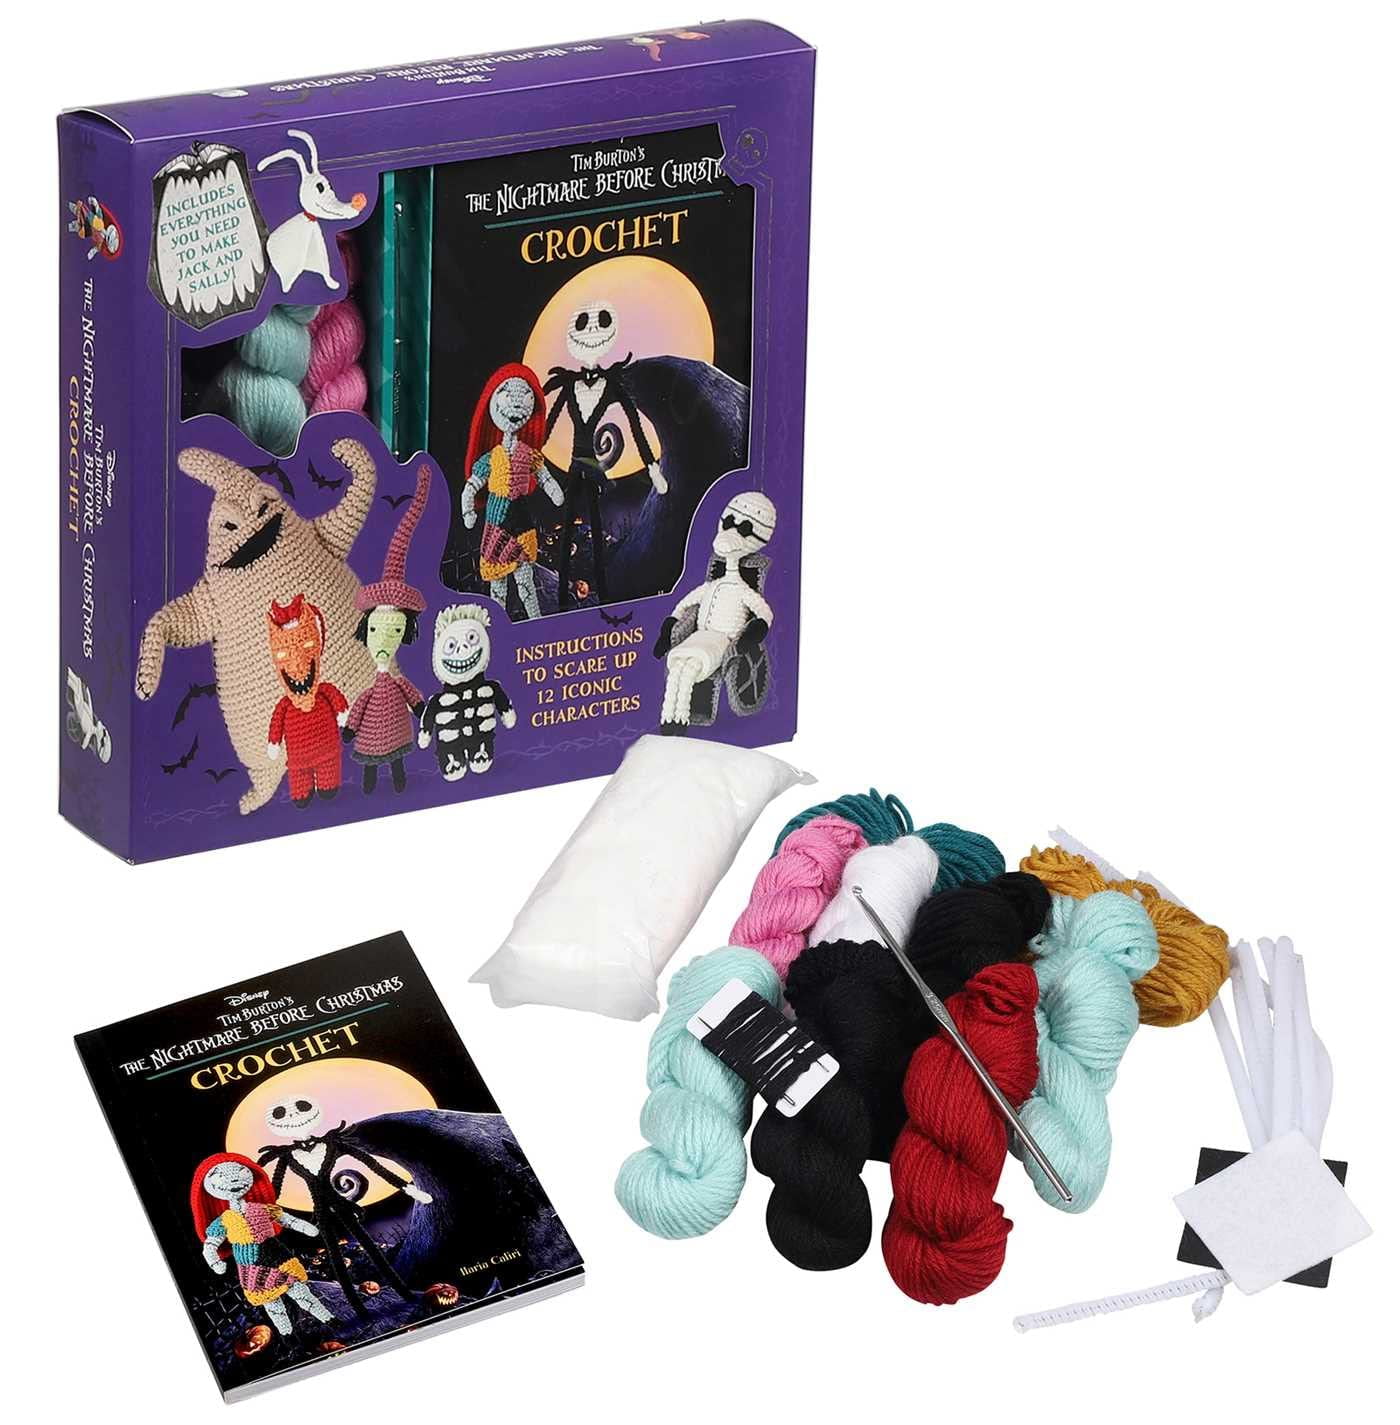 Crochet Kits: Disney Tim Burton's The Nightmare Before Christmas Crochet  (Mixed media product) 